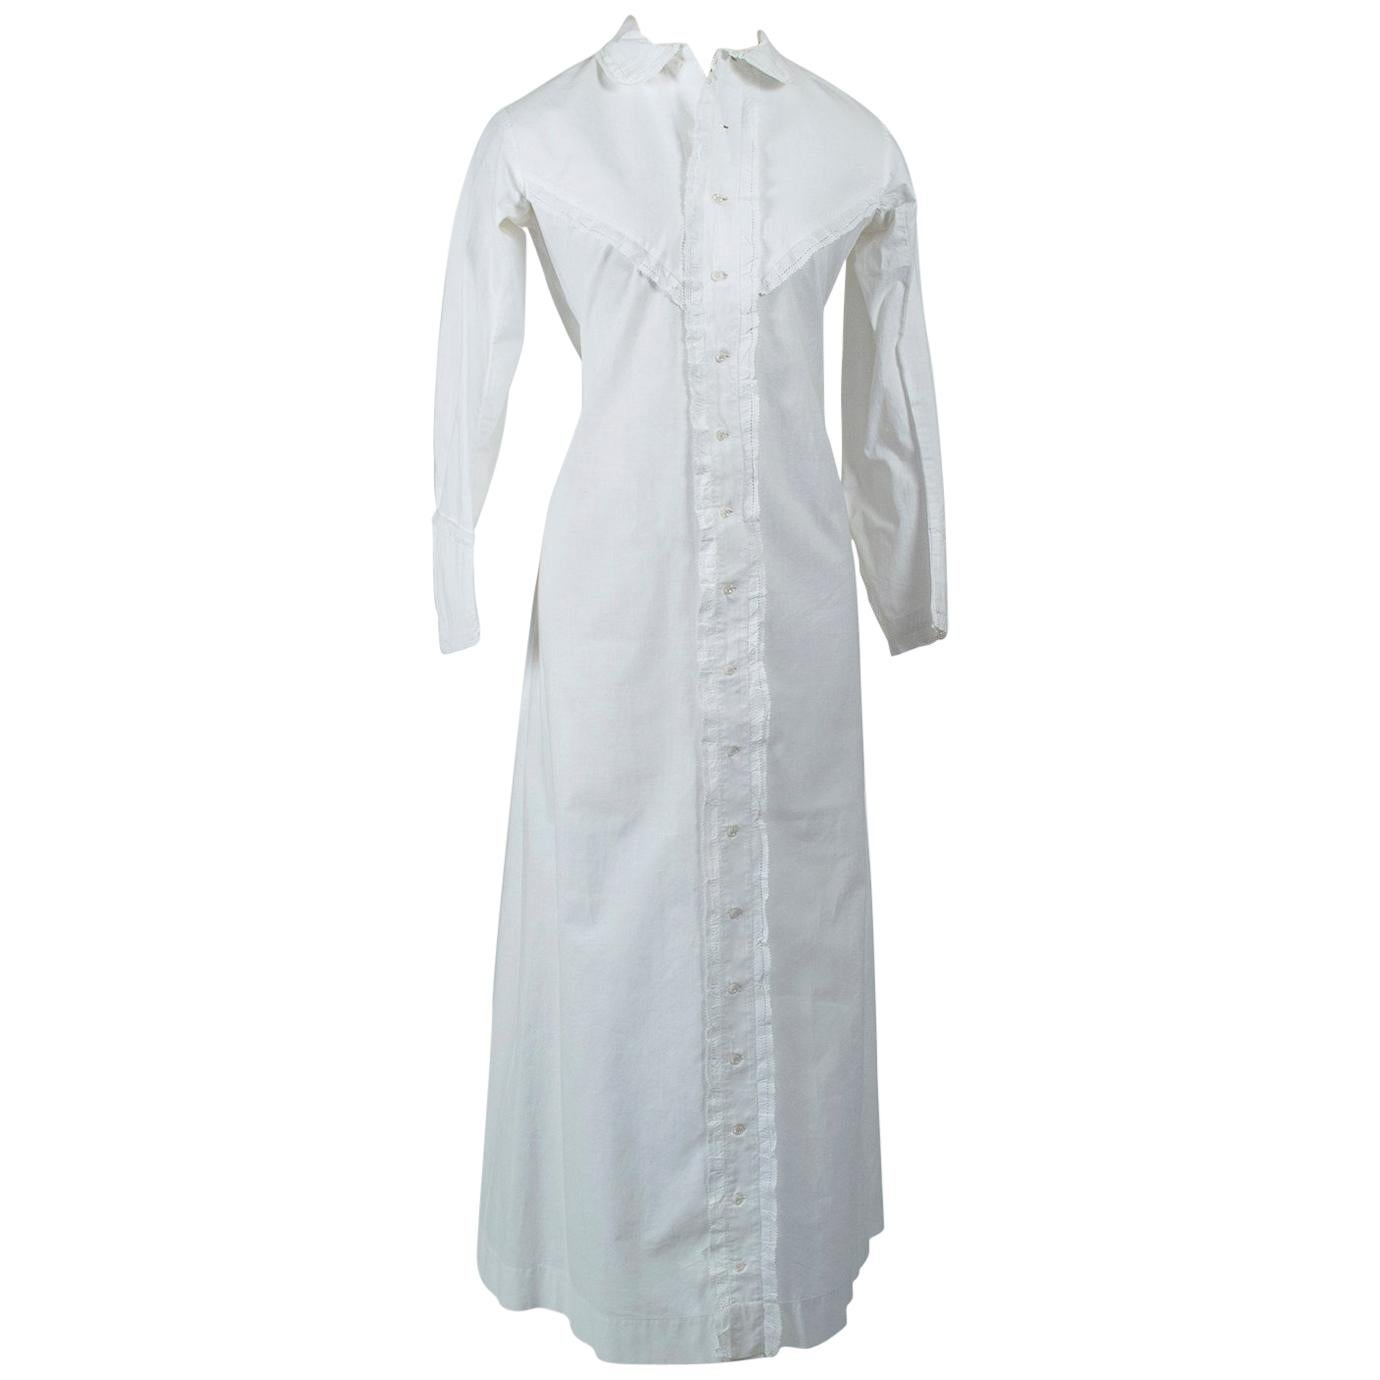 Original Civil War White Western Prairie Homesteader Shirtwaist Dress -XS, 1860s For Sale